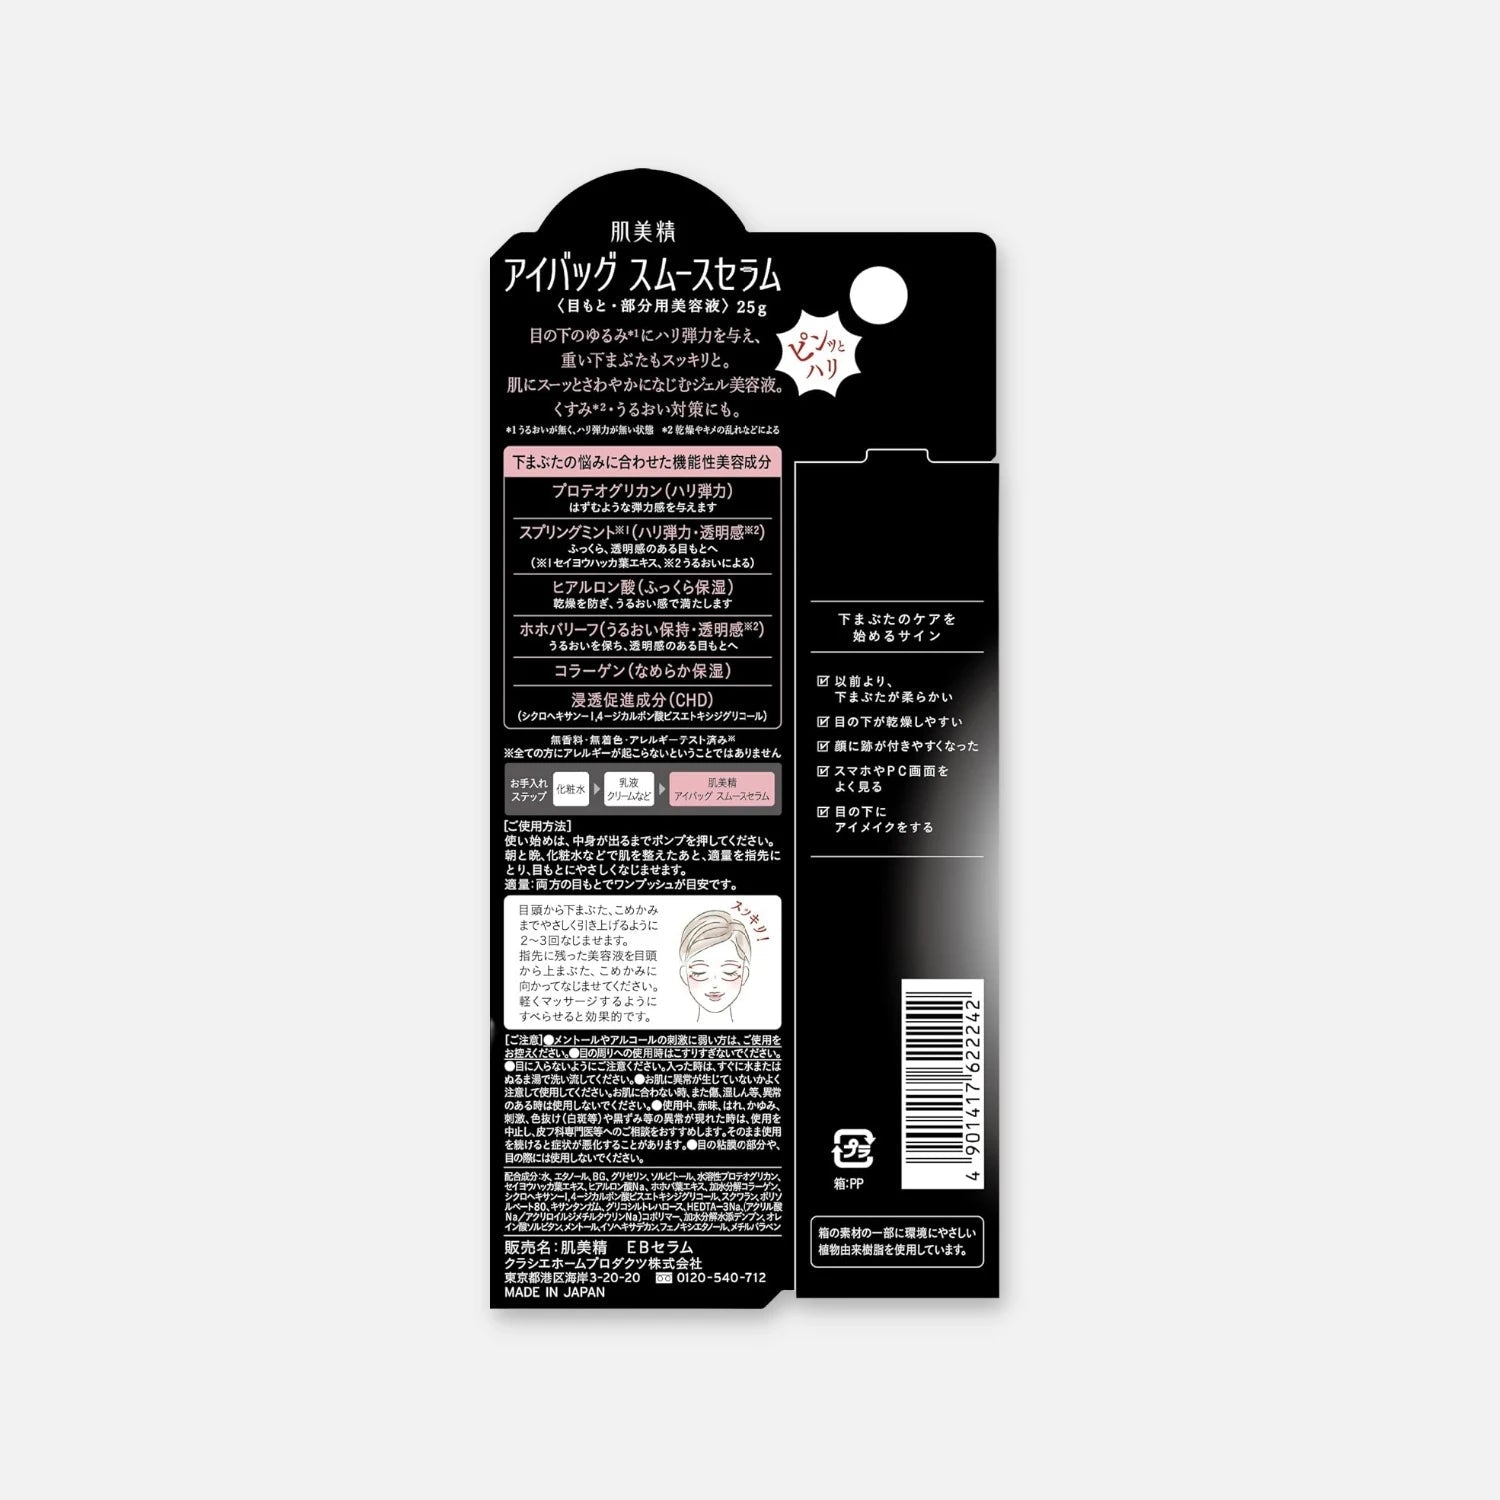 Hadabisei Eye Bags Smooth Serum 25ml - Buy Me Japan